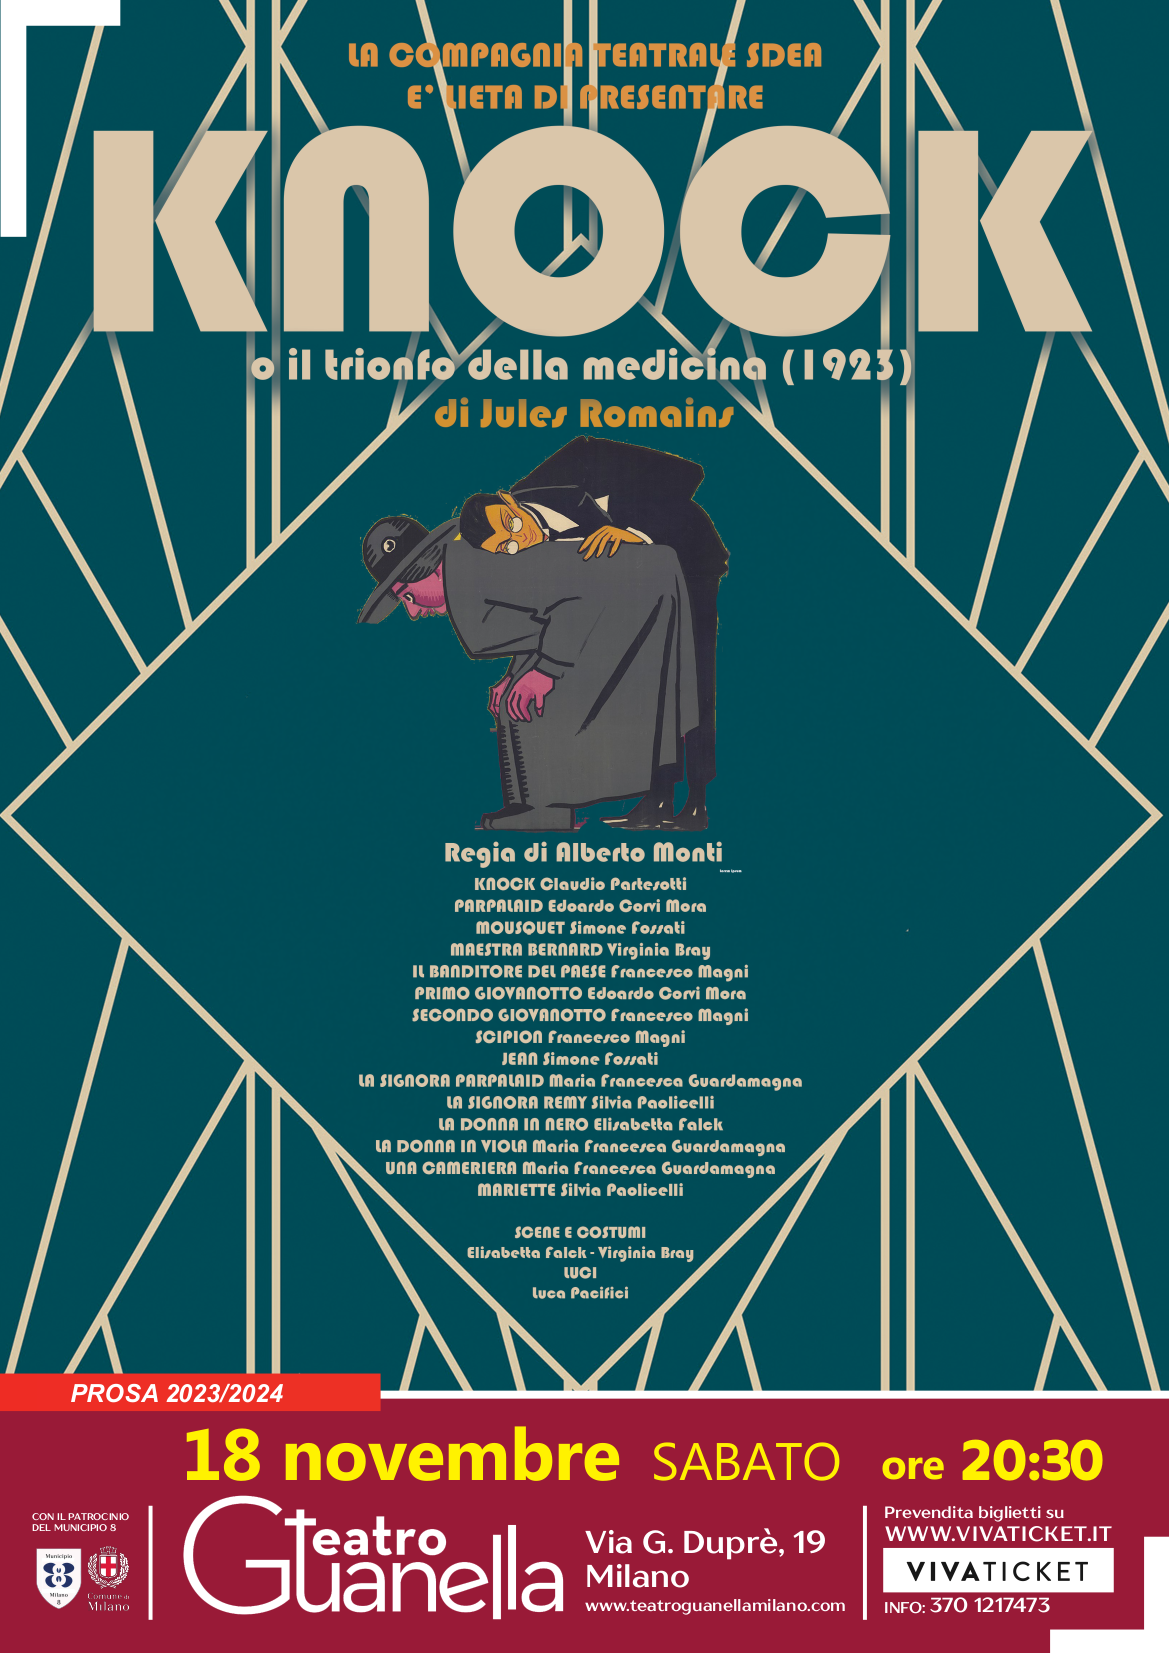 KNOCK – Compagnia Teatrale SDEA